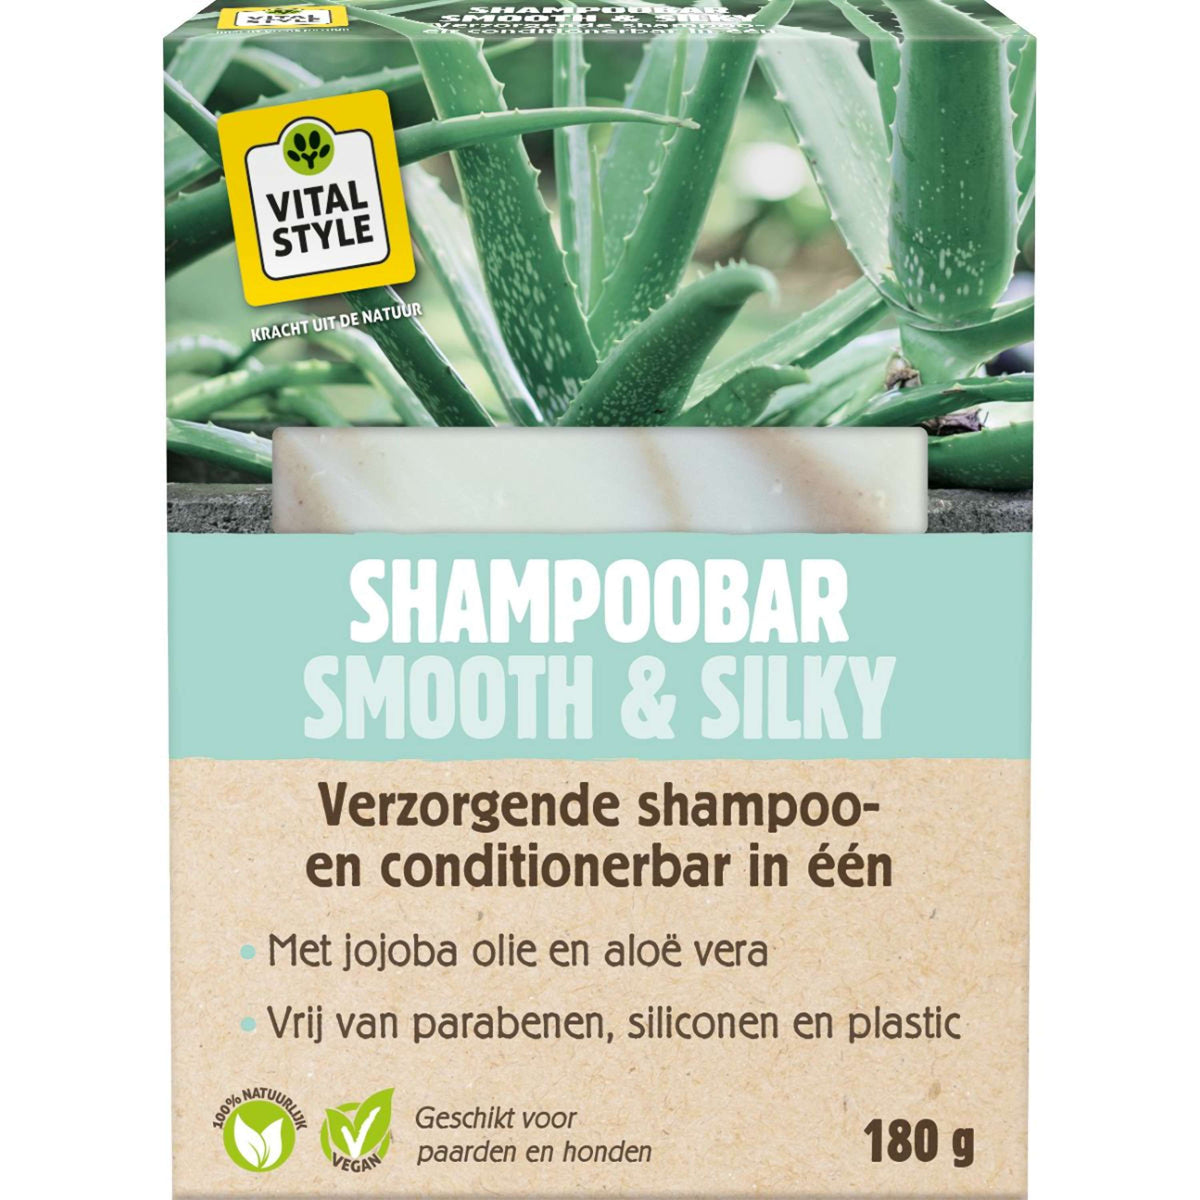 VITALstyle Shampoo Block Smooth & Silky